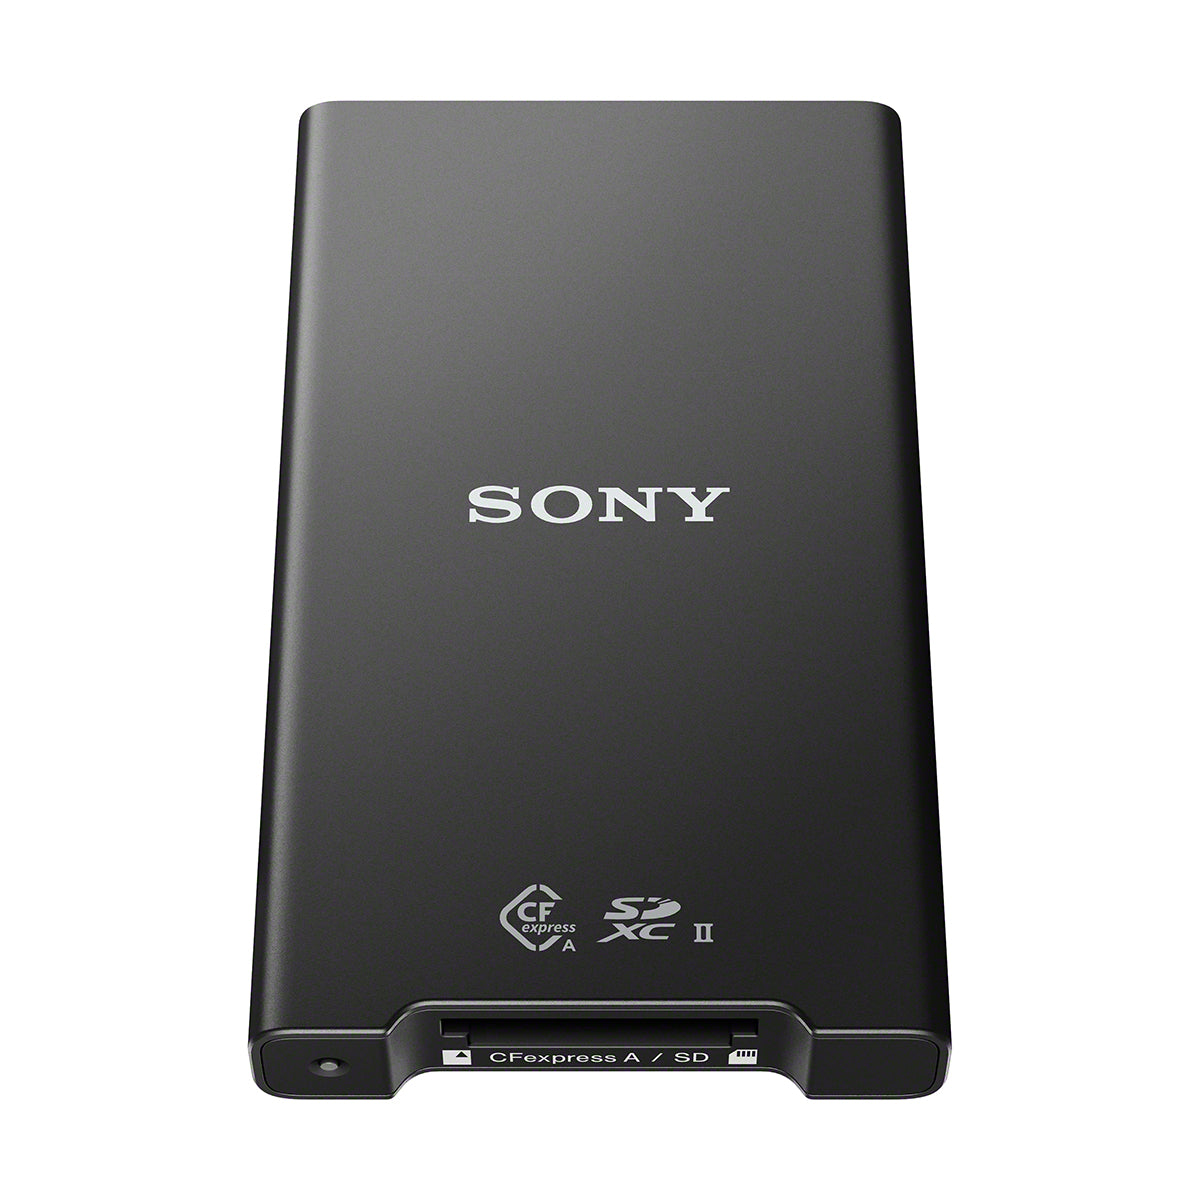 Sony CFexpress Type A / SD Memory Card Reader *OPEN BOX*